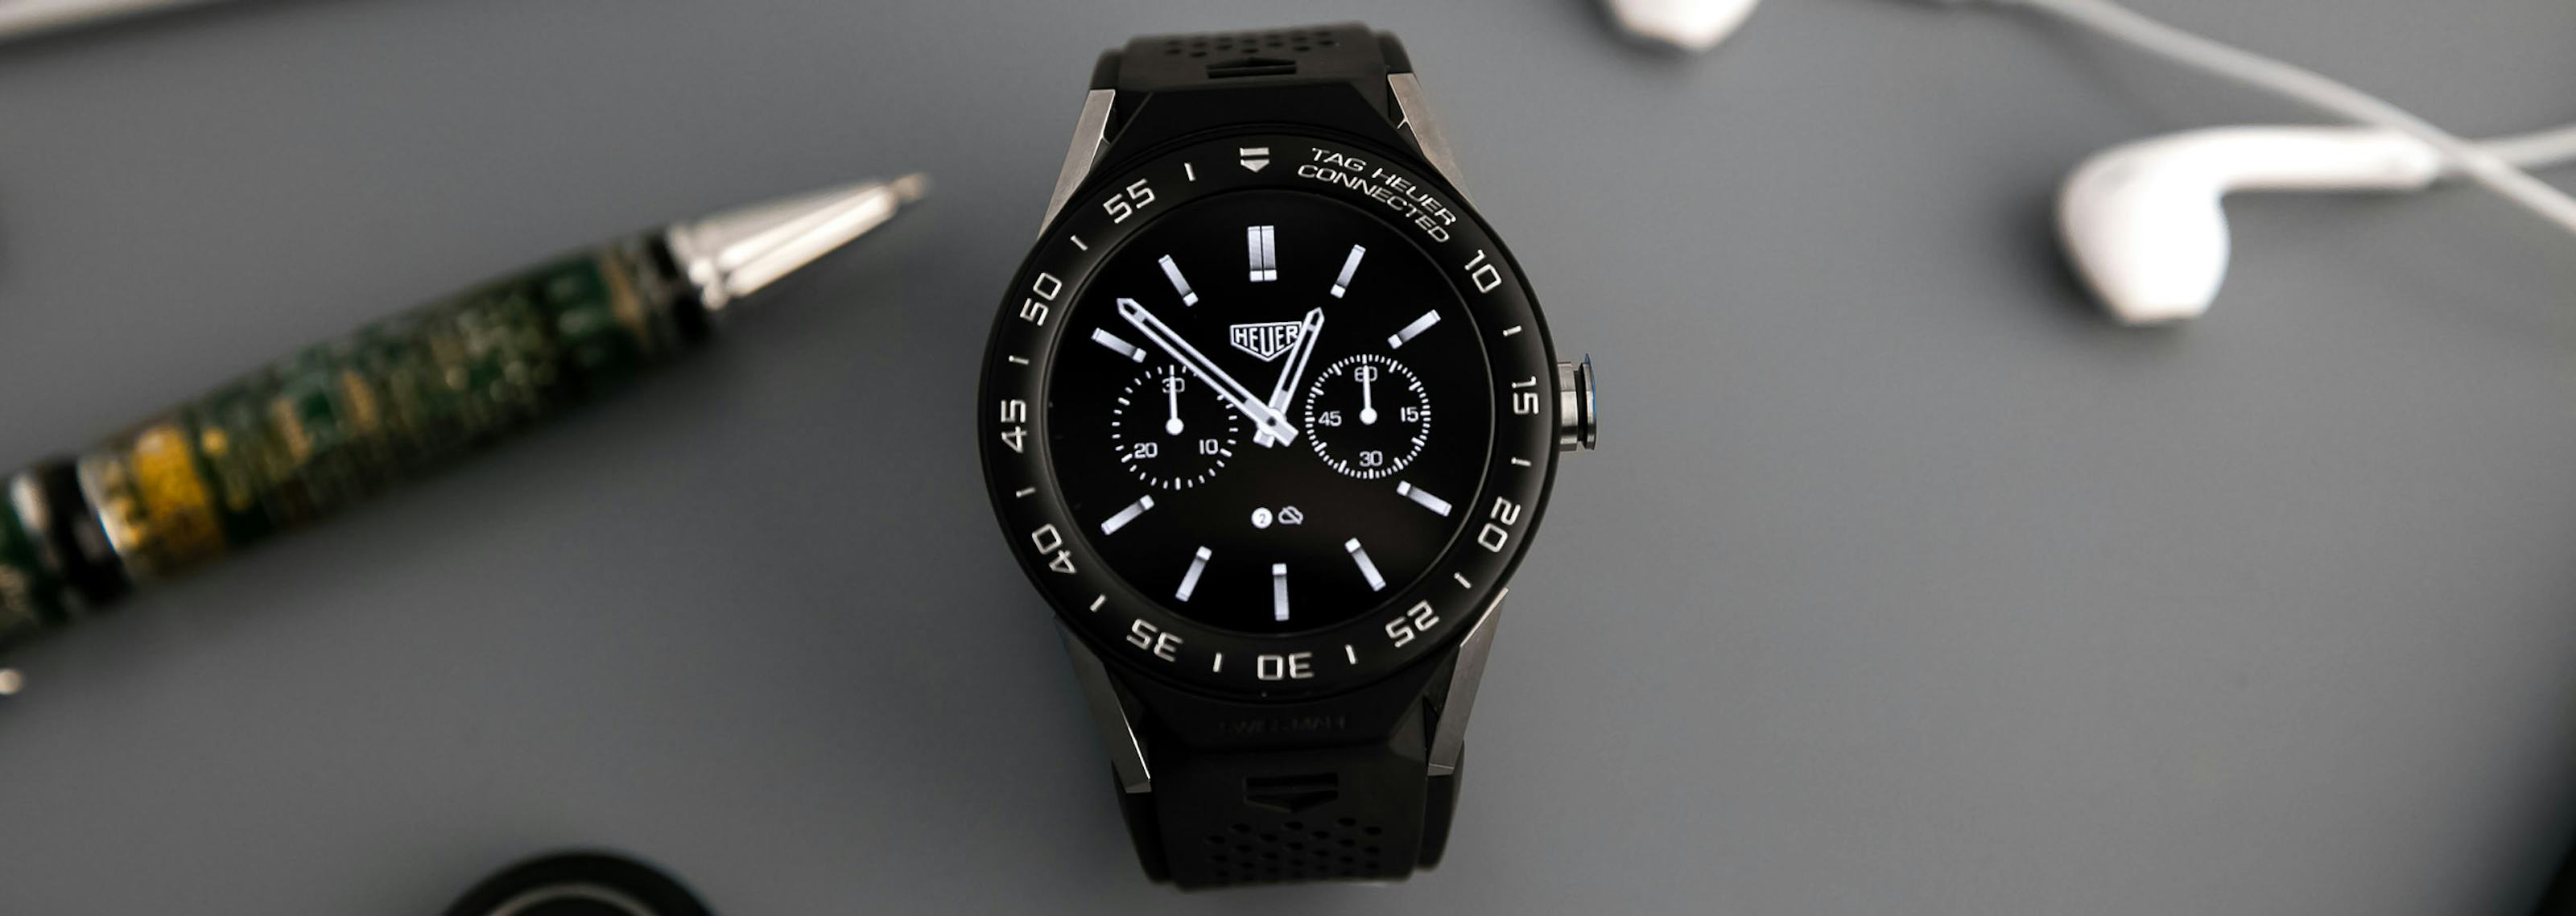 Smartwatch Vs. Traditional Watch